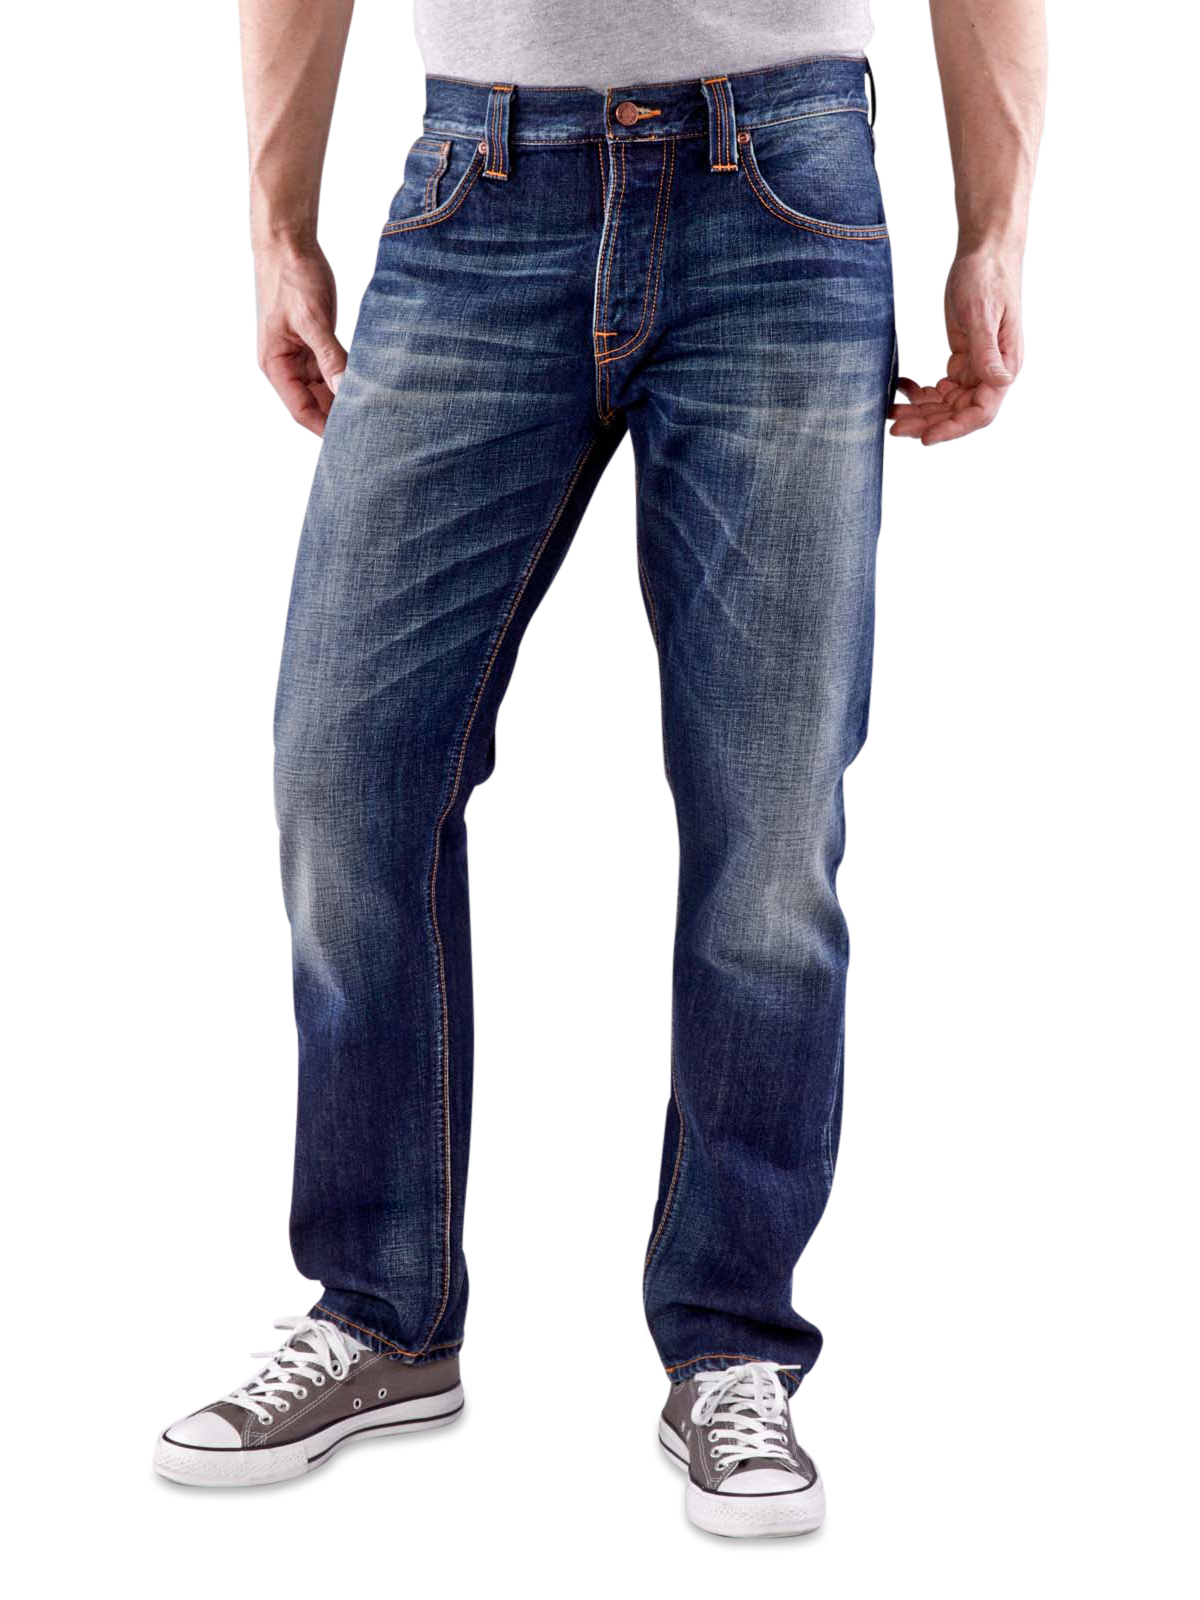 Jeans png transparent images. Pants clipart jean day